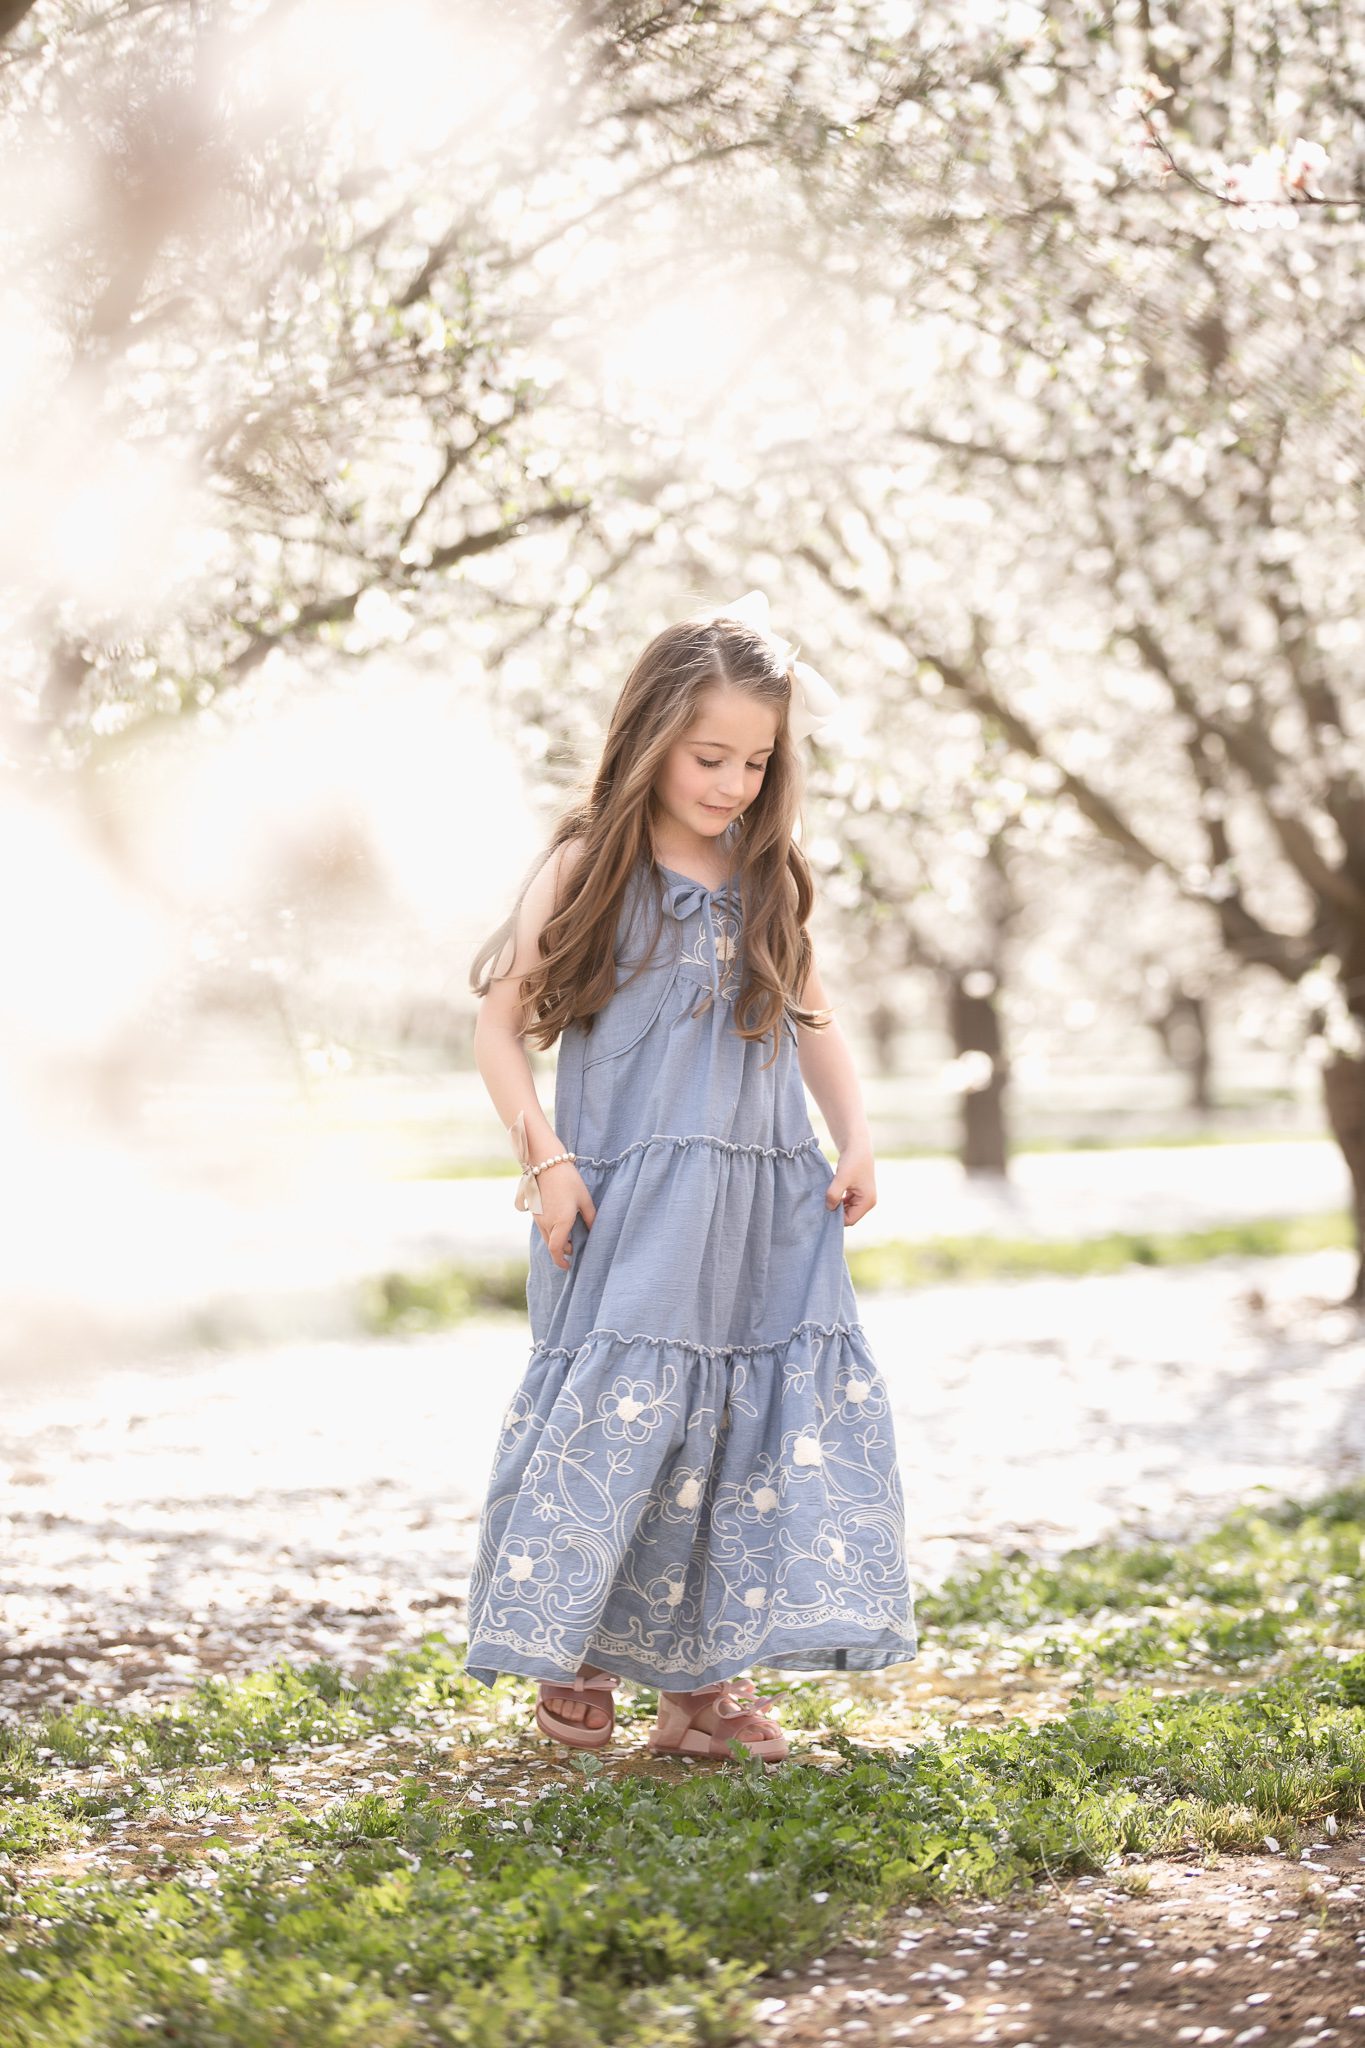 Beautiful girl, twirling in the blossom fields, blossom trail, fresno, clovis, ca